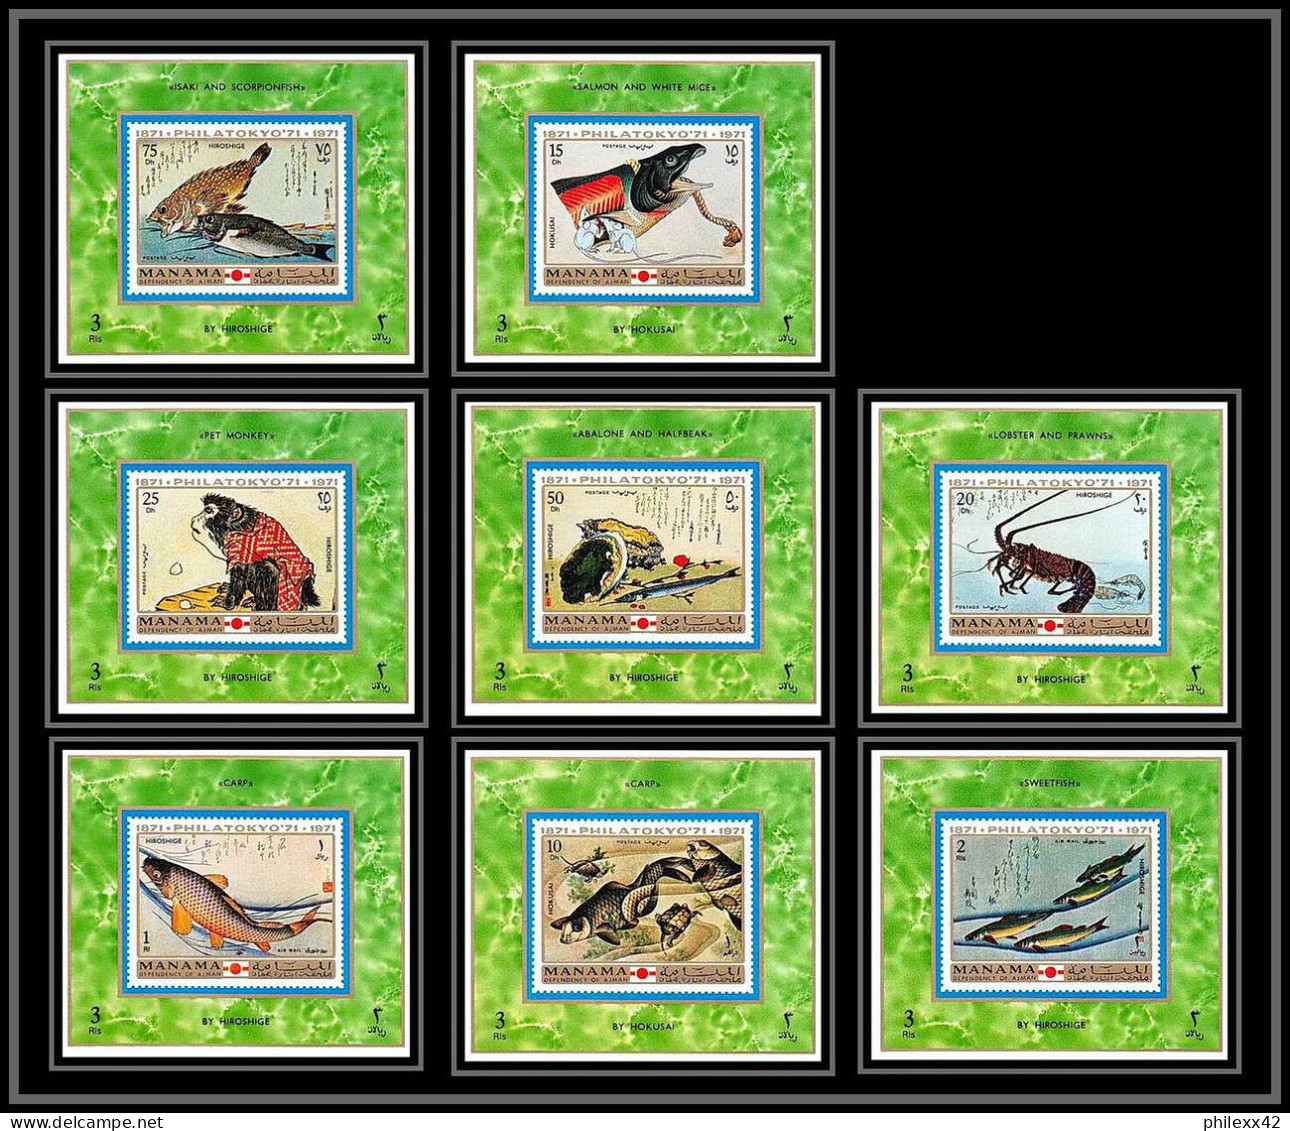 Manama - 3089 N°456/463 Philatokyo 71 Hokusai Poissons Fish Crawfish Deluxe Miniature Sheets Turtles ** MNH Japan - Crustaceans